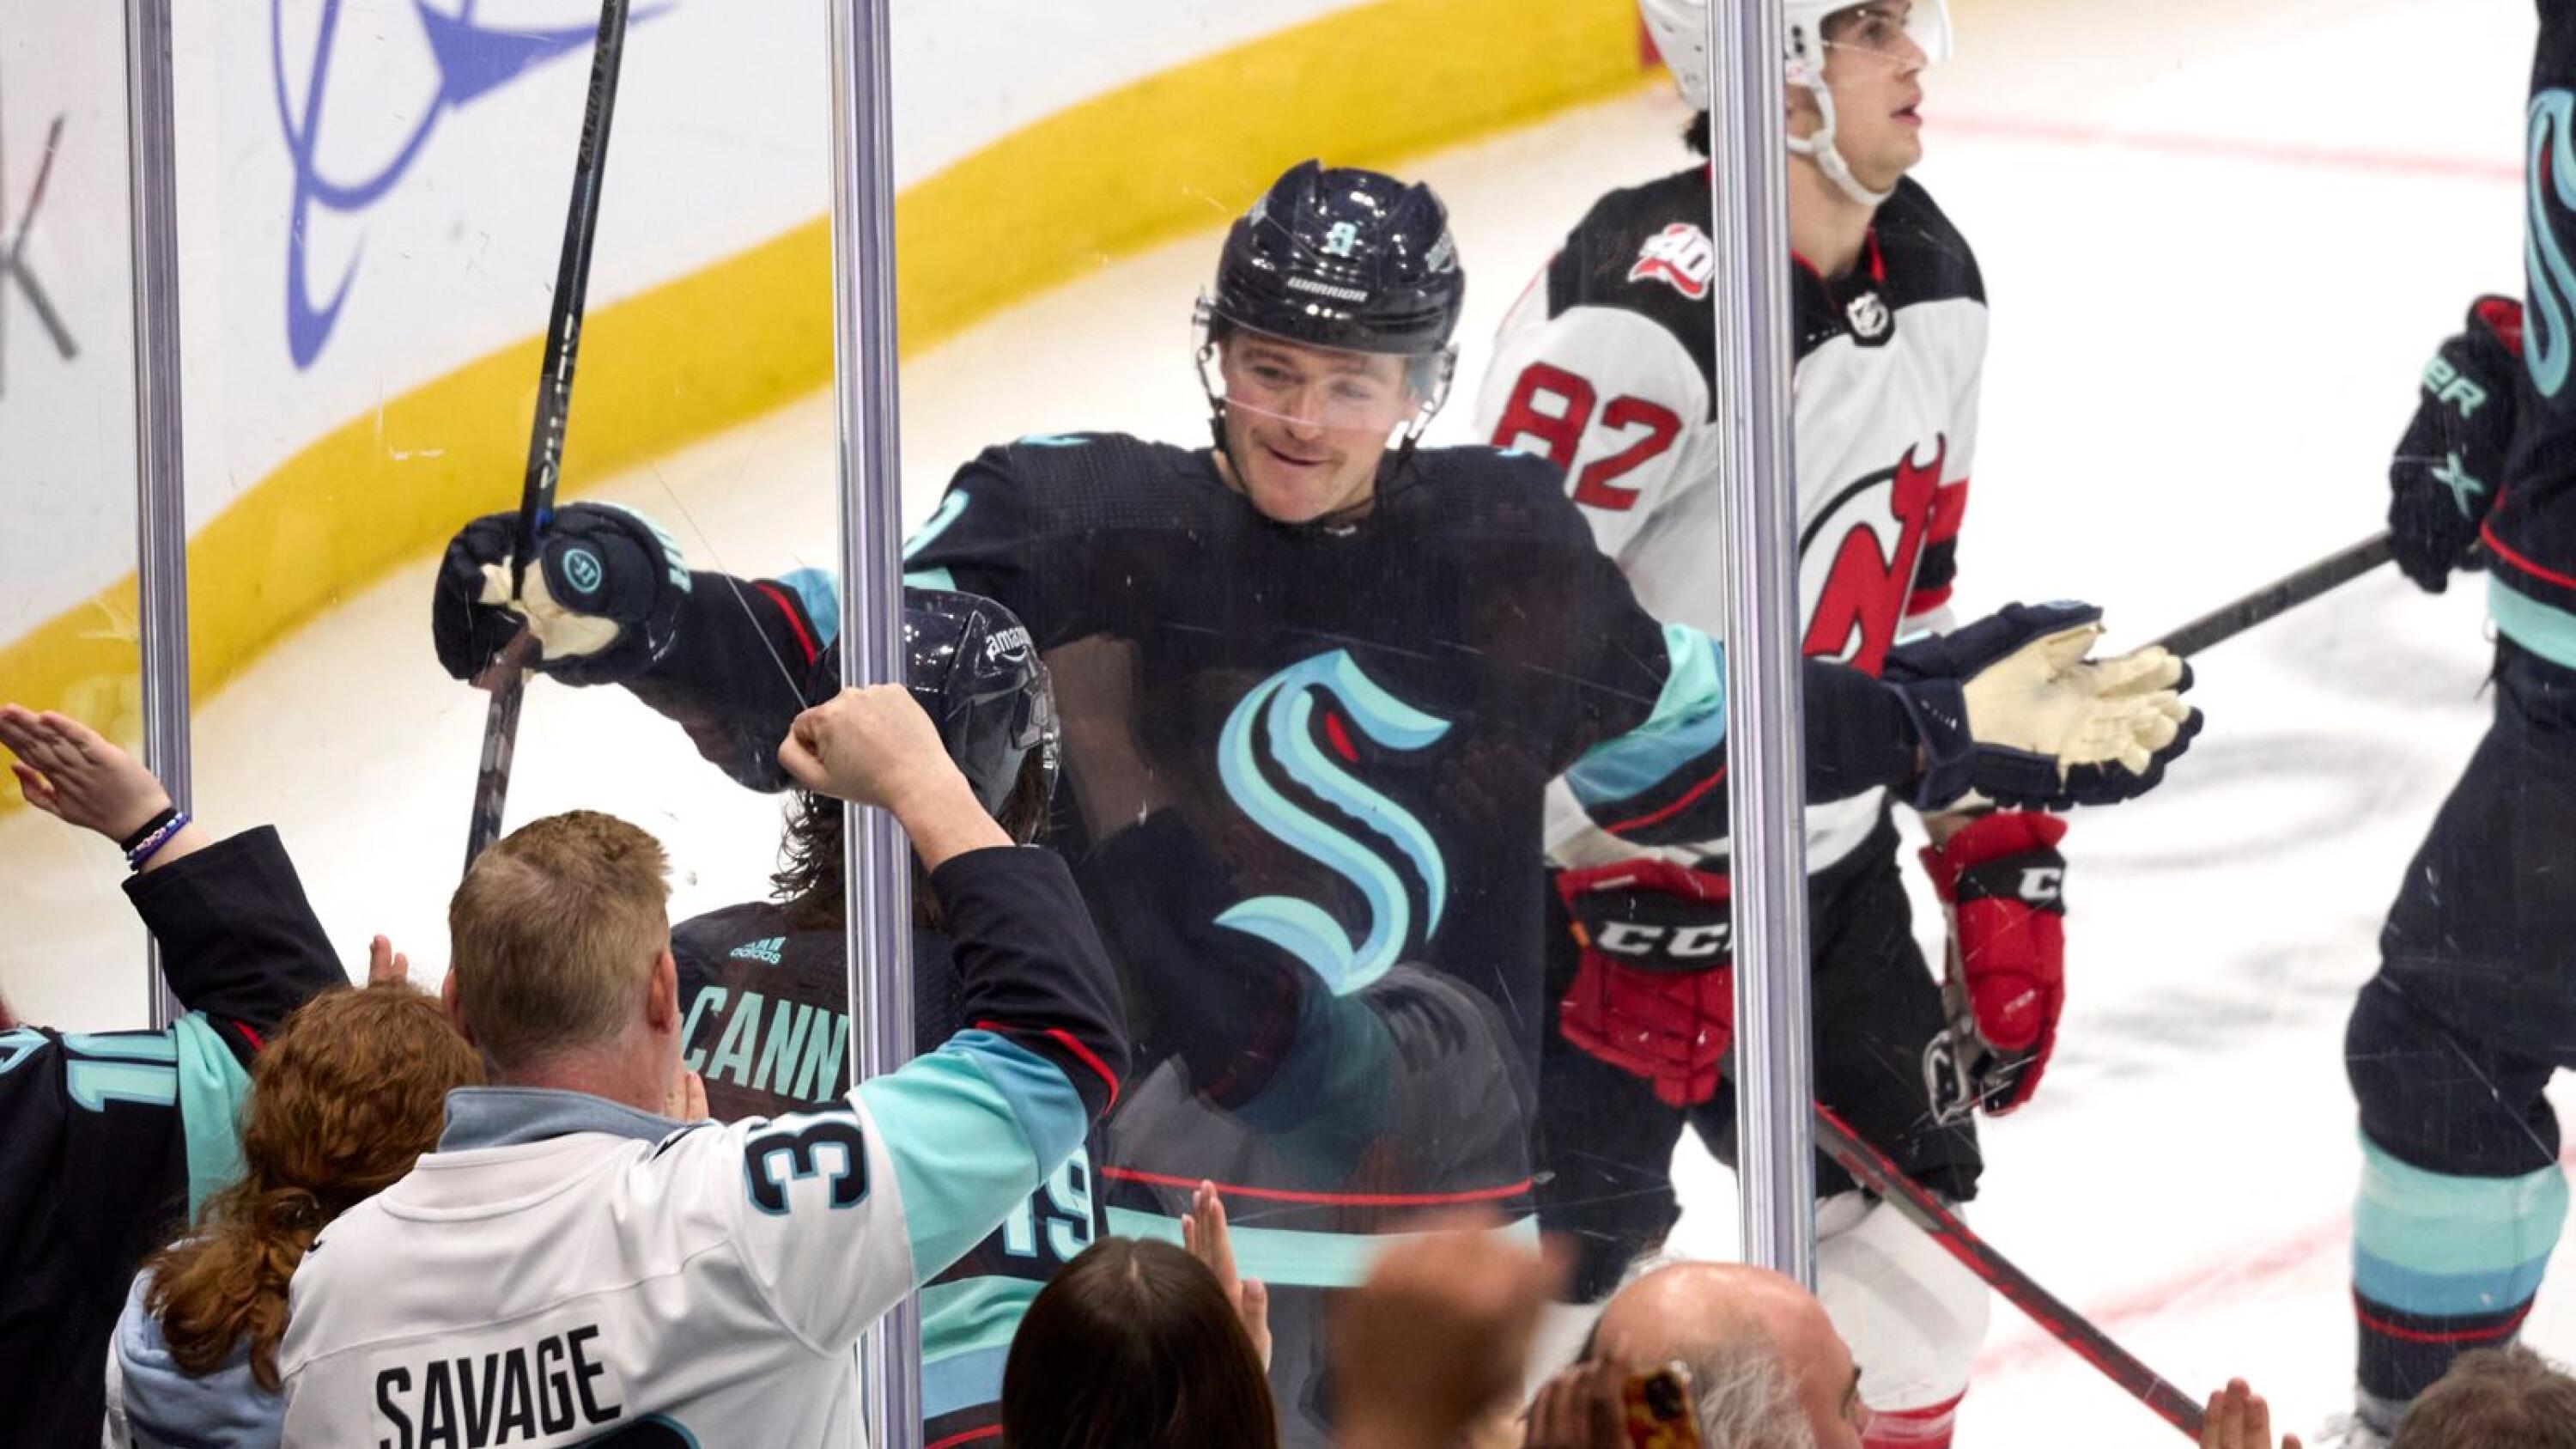 NHL-leading Devils shut out struggling Blackhawks